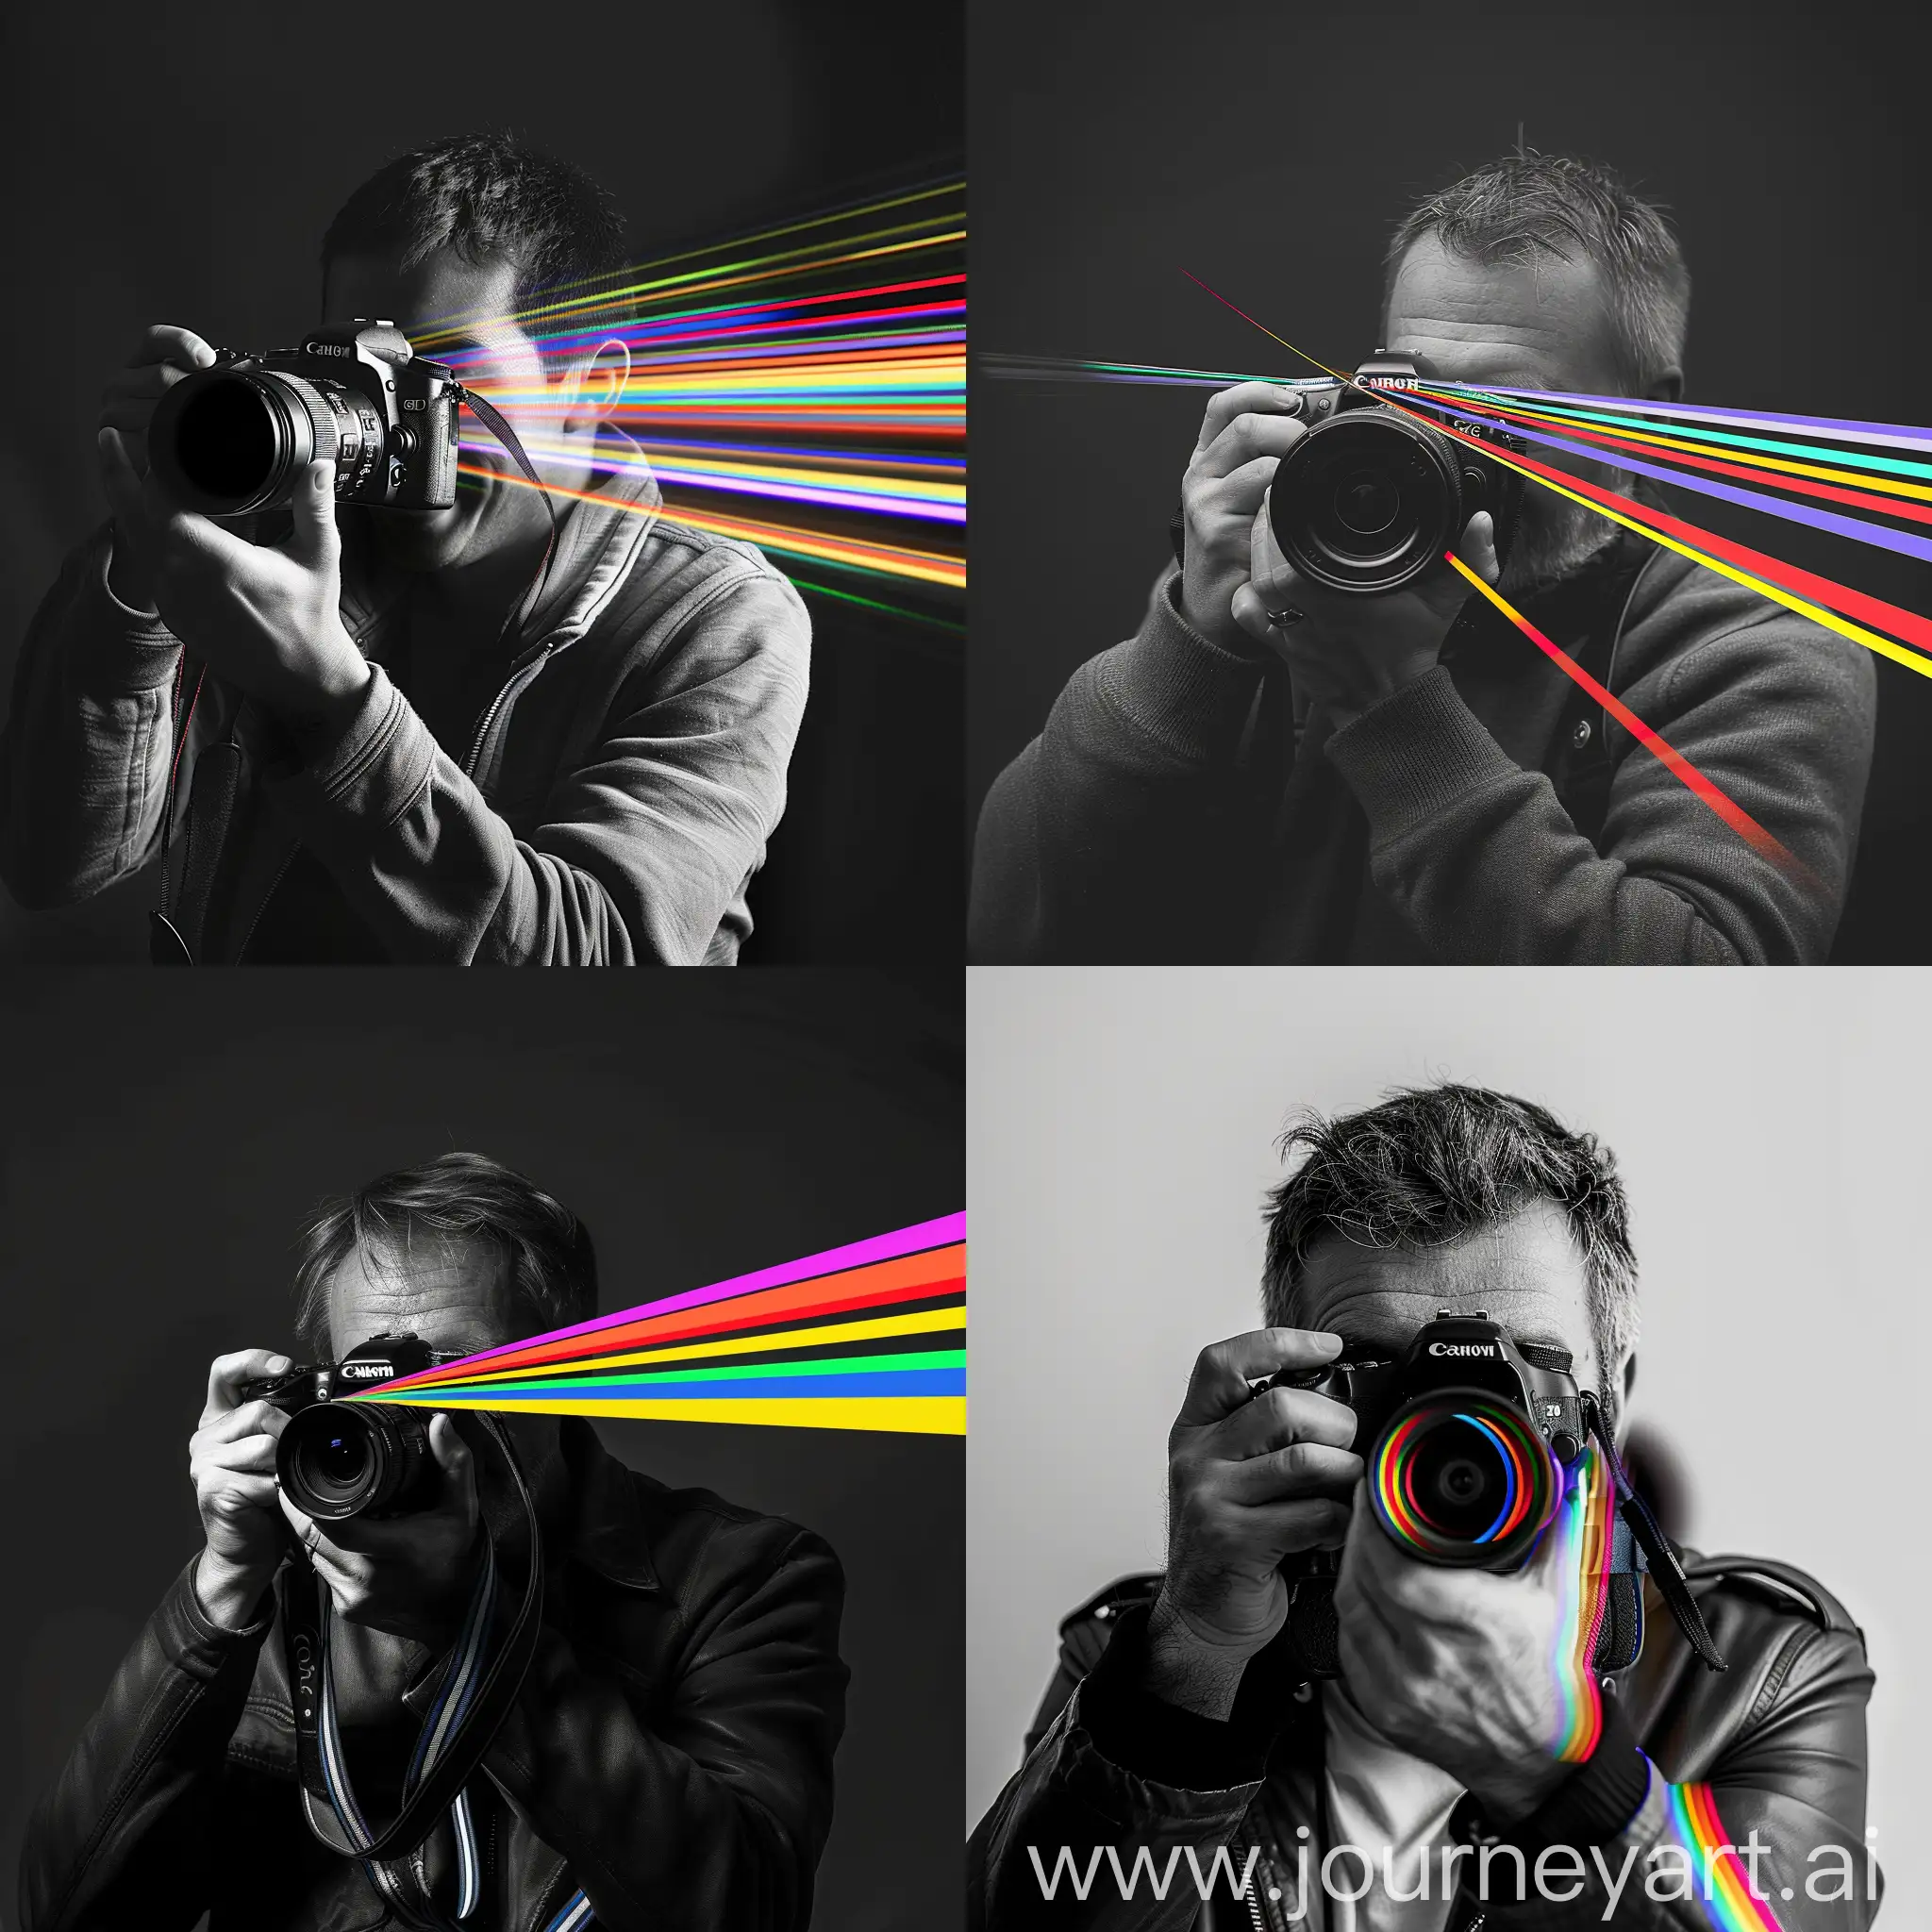 Monochrome-Photographer-Captures-Vibrant-Stripes-in-Camera-Shot